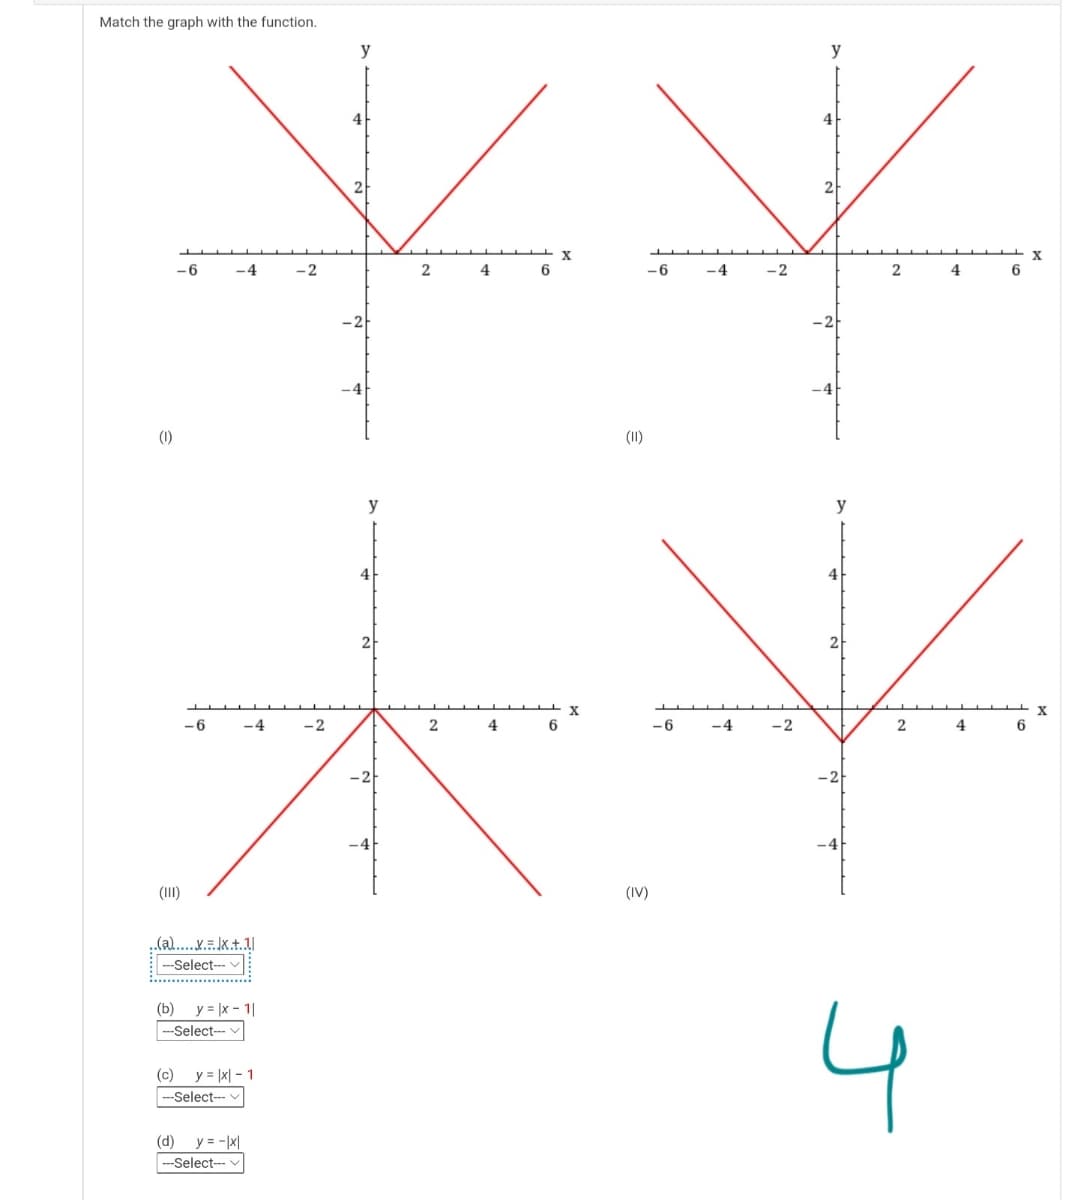 Match the graph with the function.
y
y
4
-6
-4
-2
2
-6
- 4
-2
4
6
(1)
(II)
y
y
4
4
2
2
-6
-4
-2
4
6
-6
6.
(II)
(IV)
(a.x.x.t.1
--Select-- v
(b) y = |x - 1|
4
--Select-- v
(c) y = |x| - 1
-Select-
(d)
y = -|x|
-Select--
